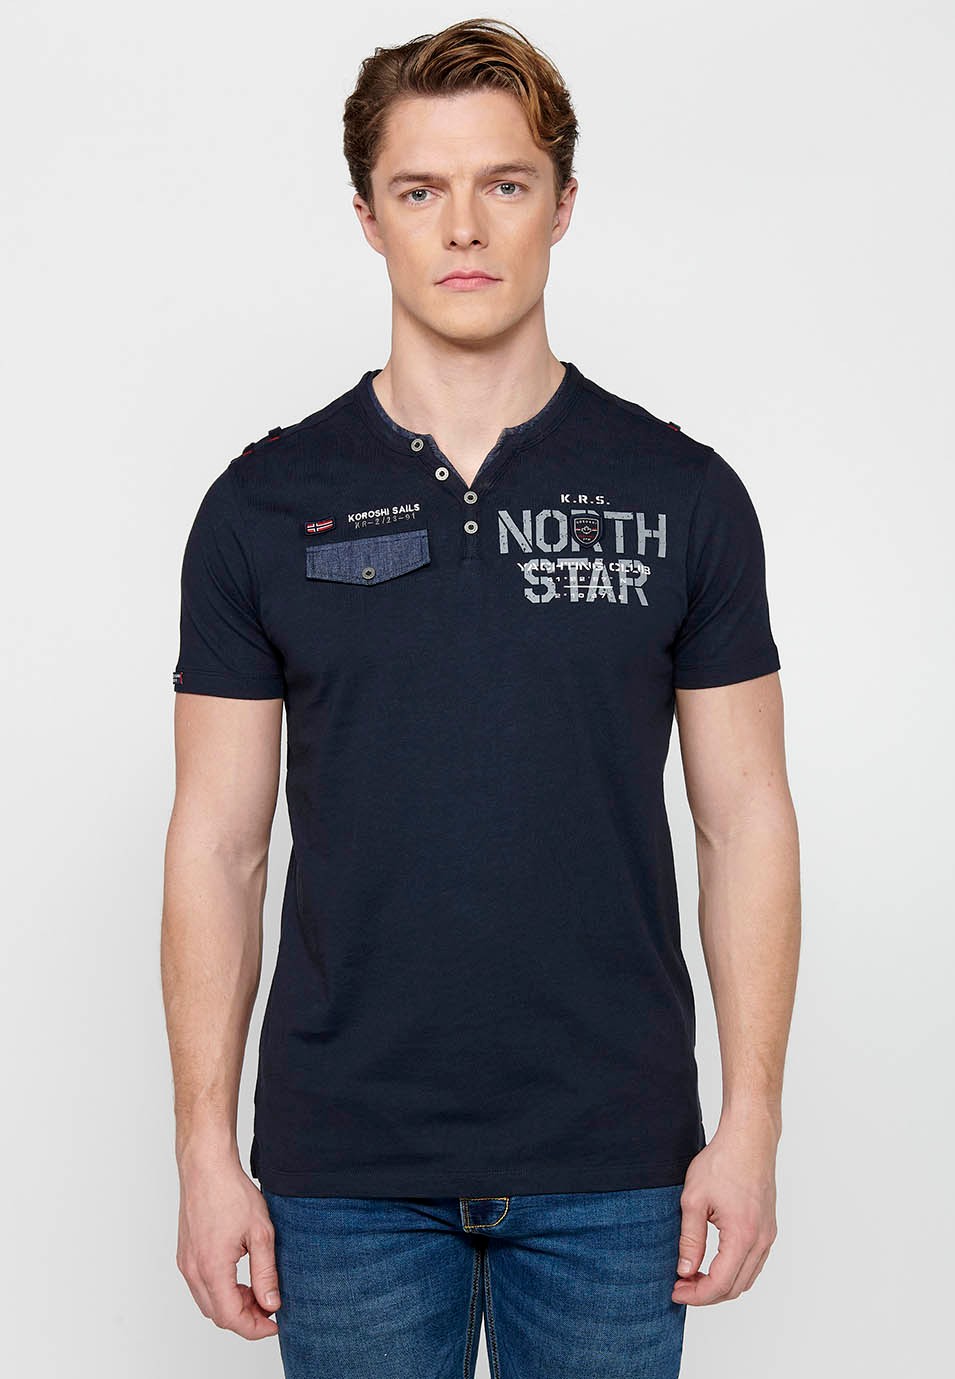 Camiseta de manga corta de Algodón con Cuello redondo con abertura abotonada de Color Navy para Hombre 7